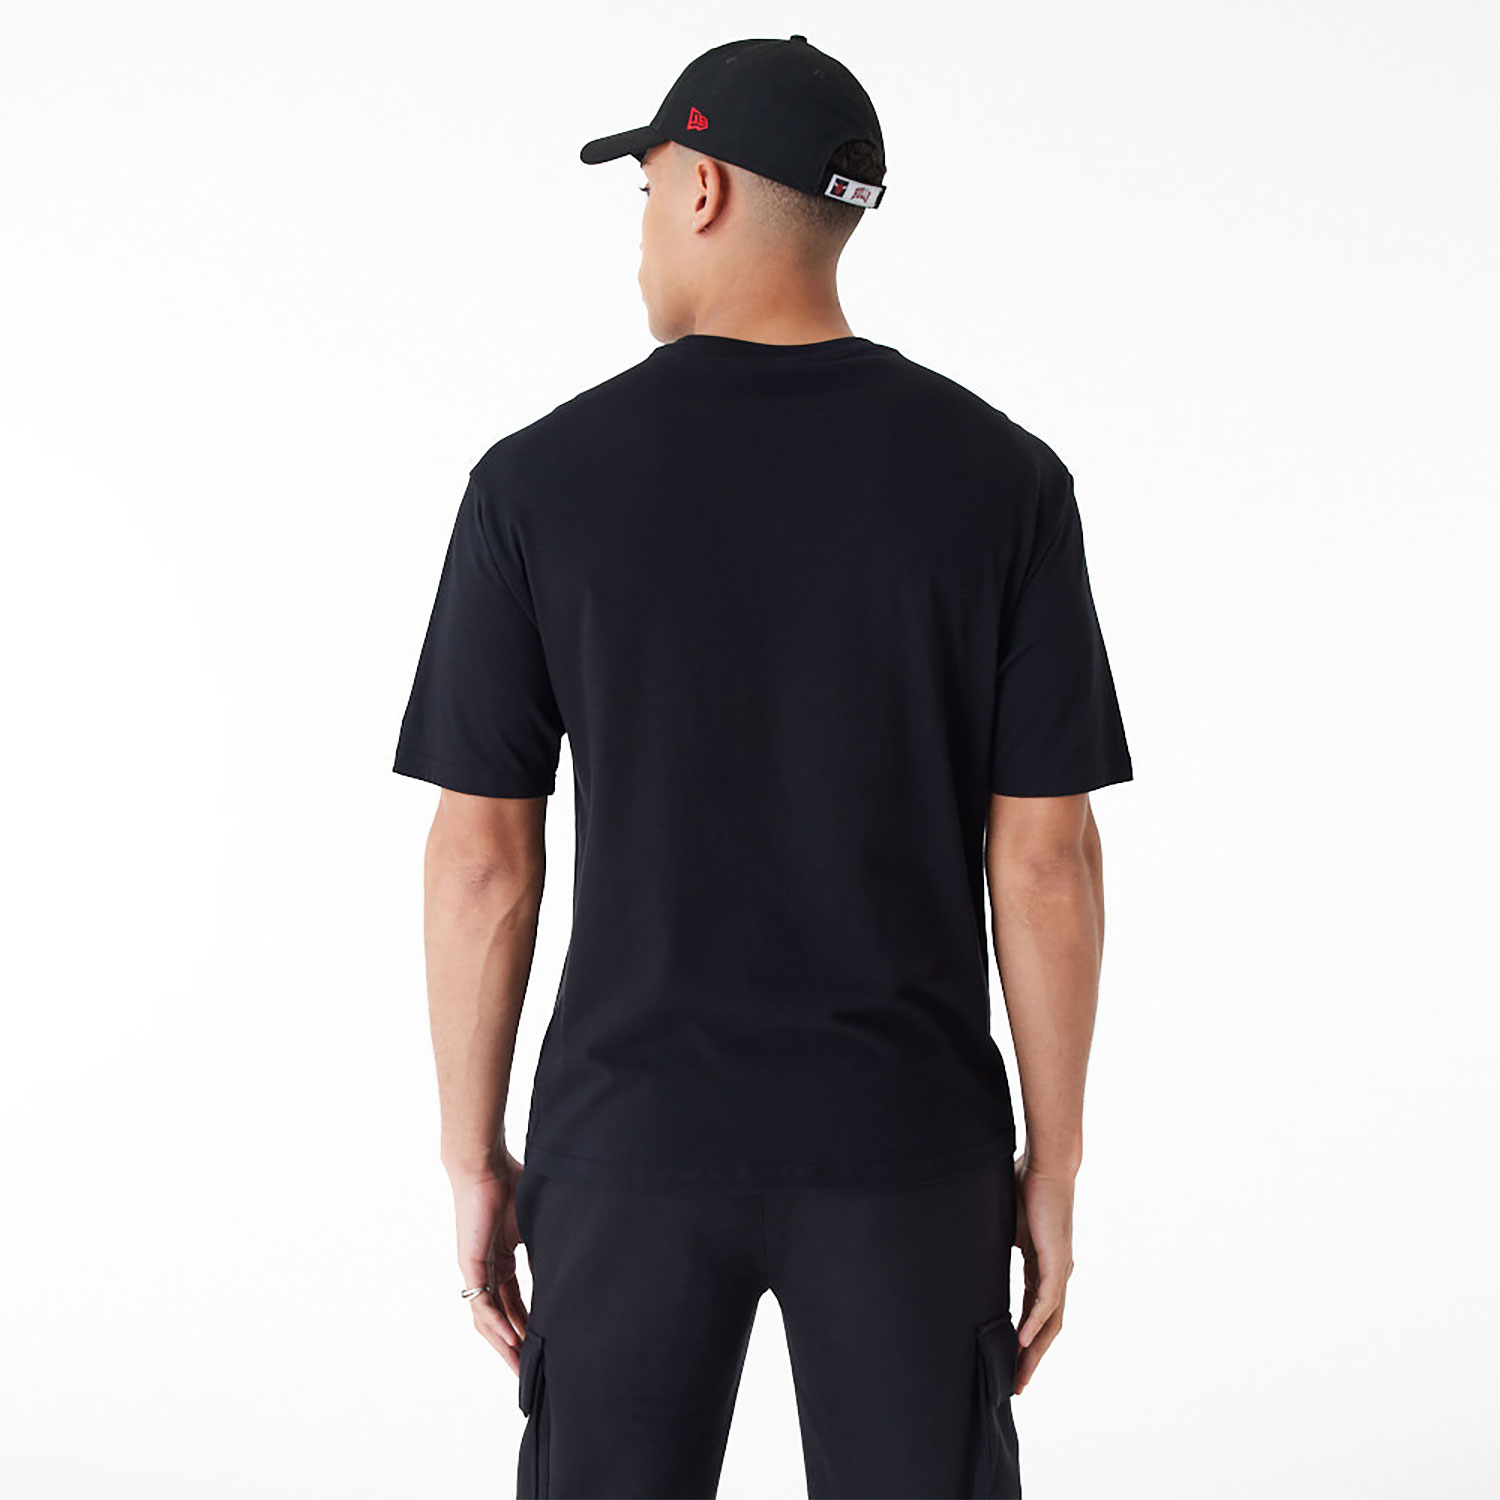 Chicago Bulls NBA Flame Graphic Black Oversized T-Shirt